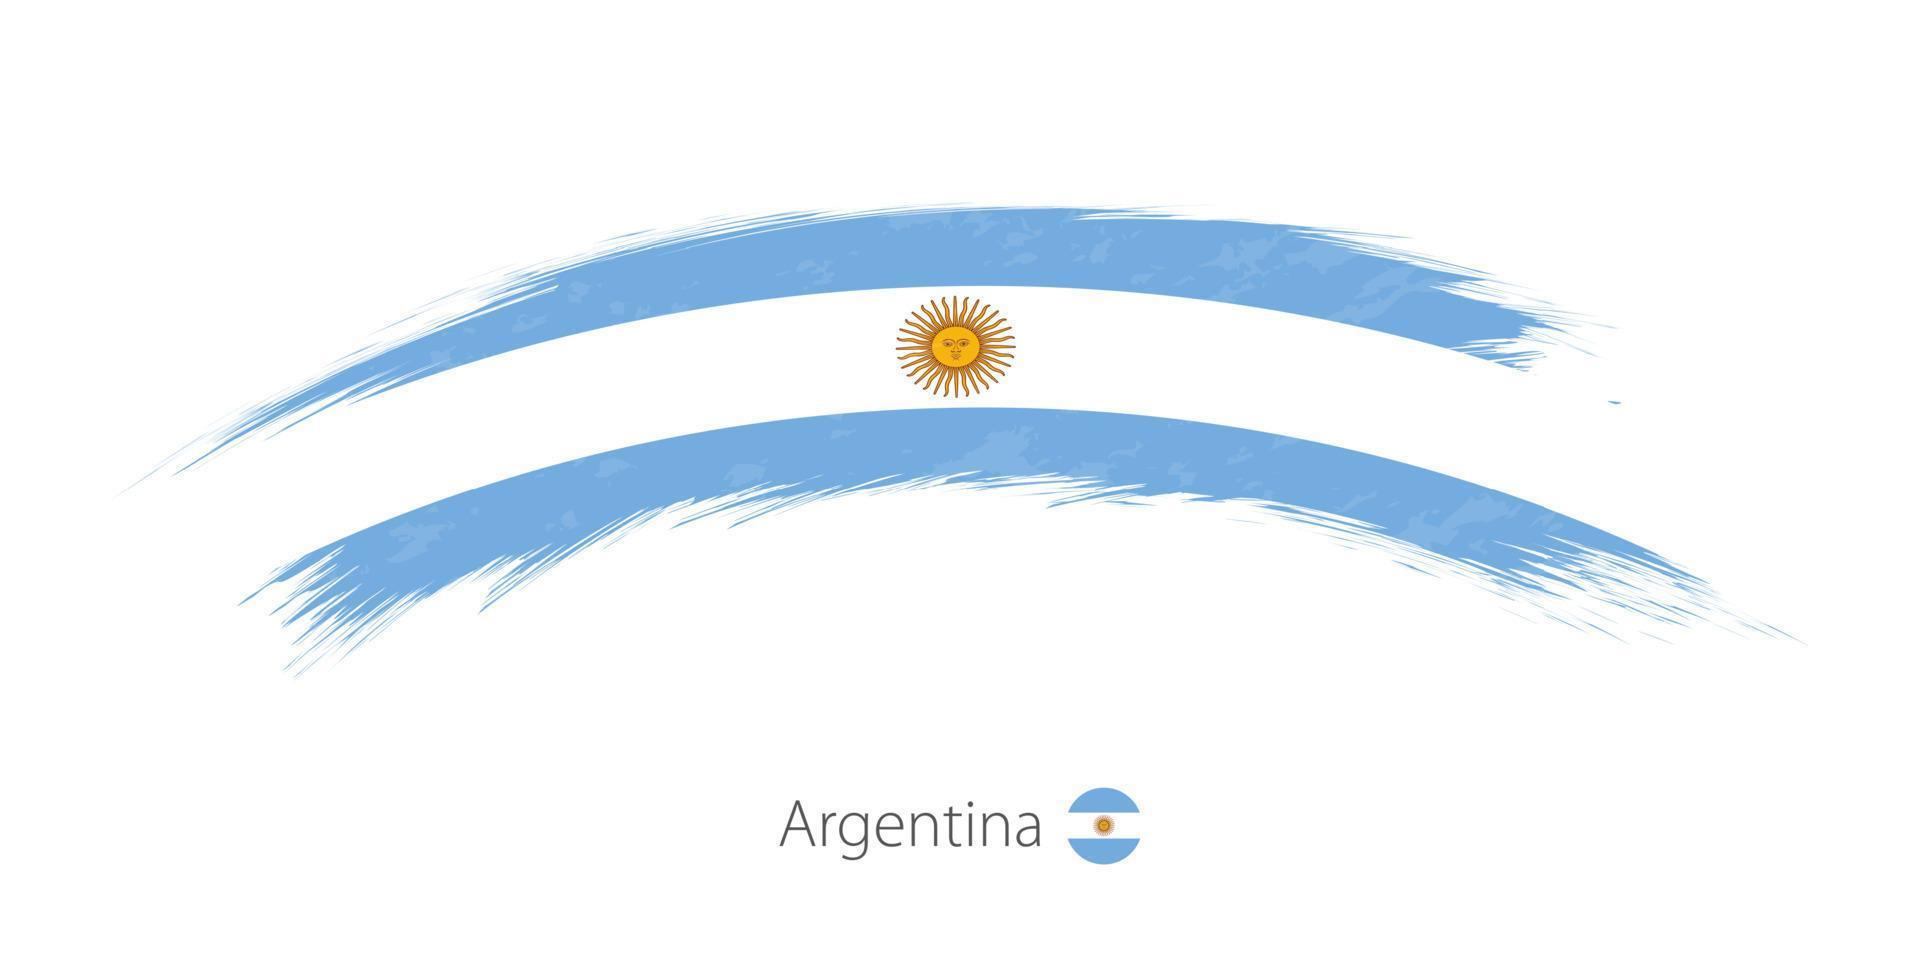 bandeira da argentina na pincelada grunge arredondado. vetor